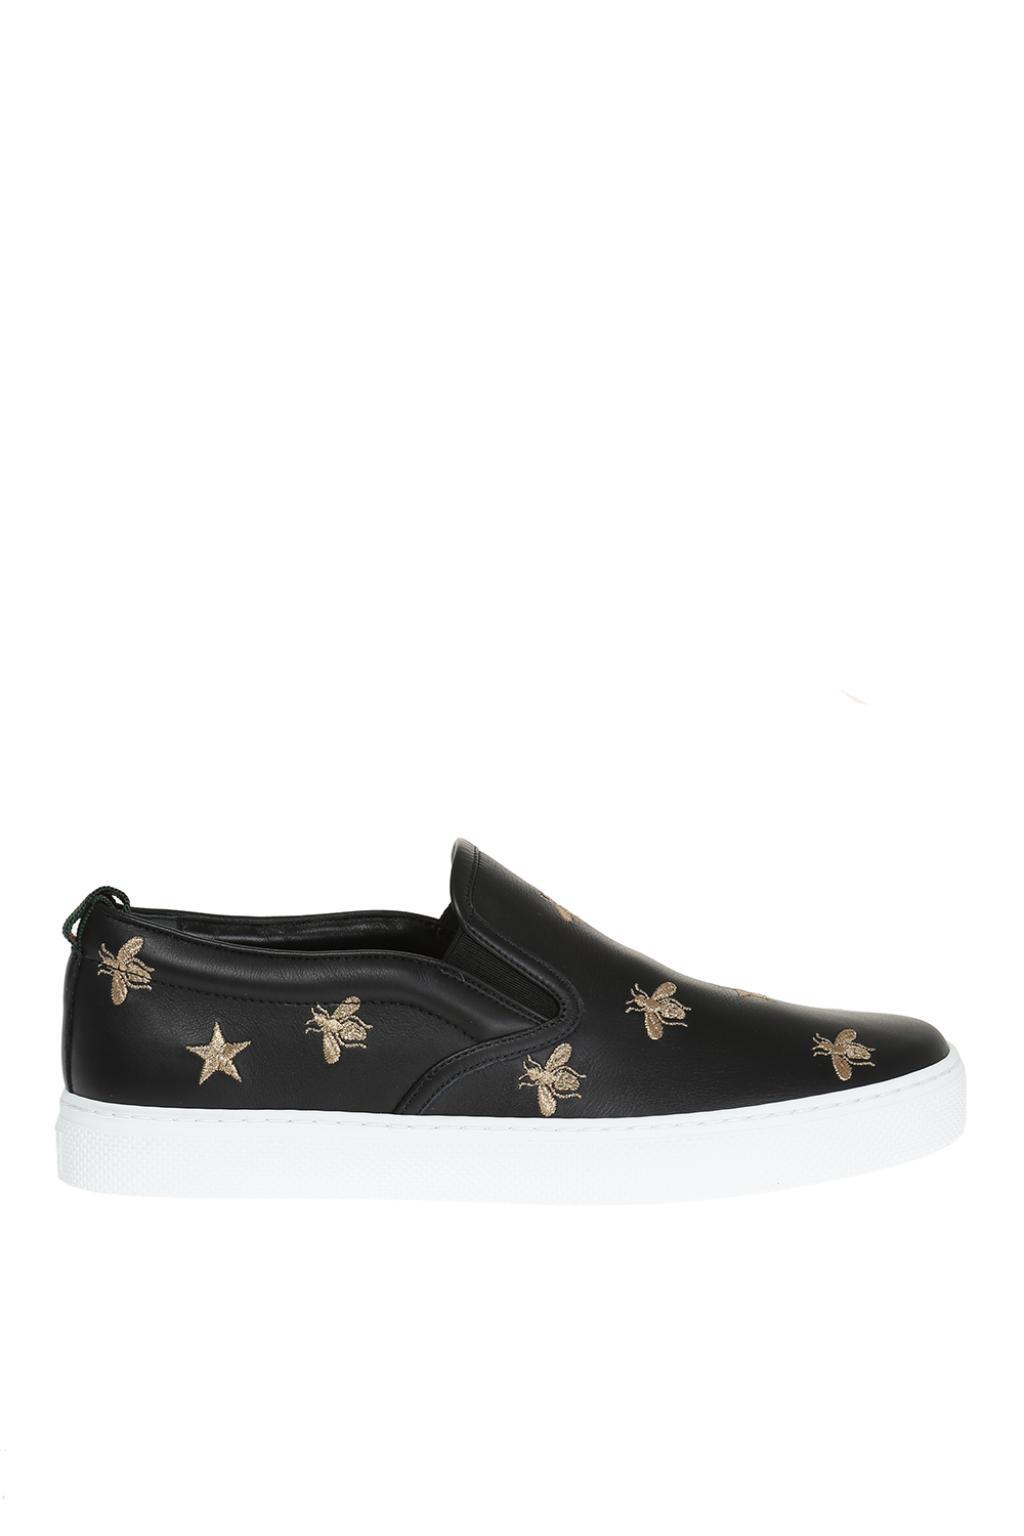 Buy Gucci Men's Dublin Microguccissima Leather Signature Slip-On Sneaker,  Black (11.5 US / 10.5 at